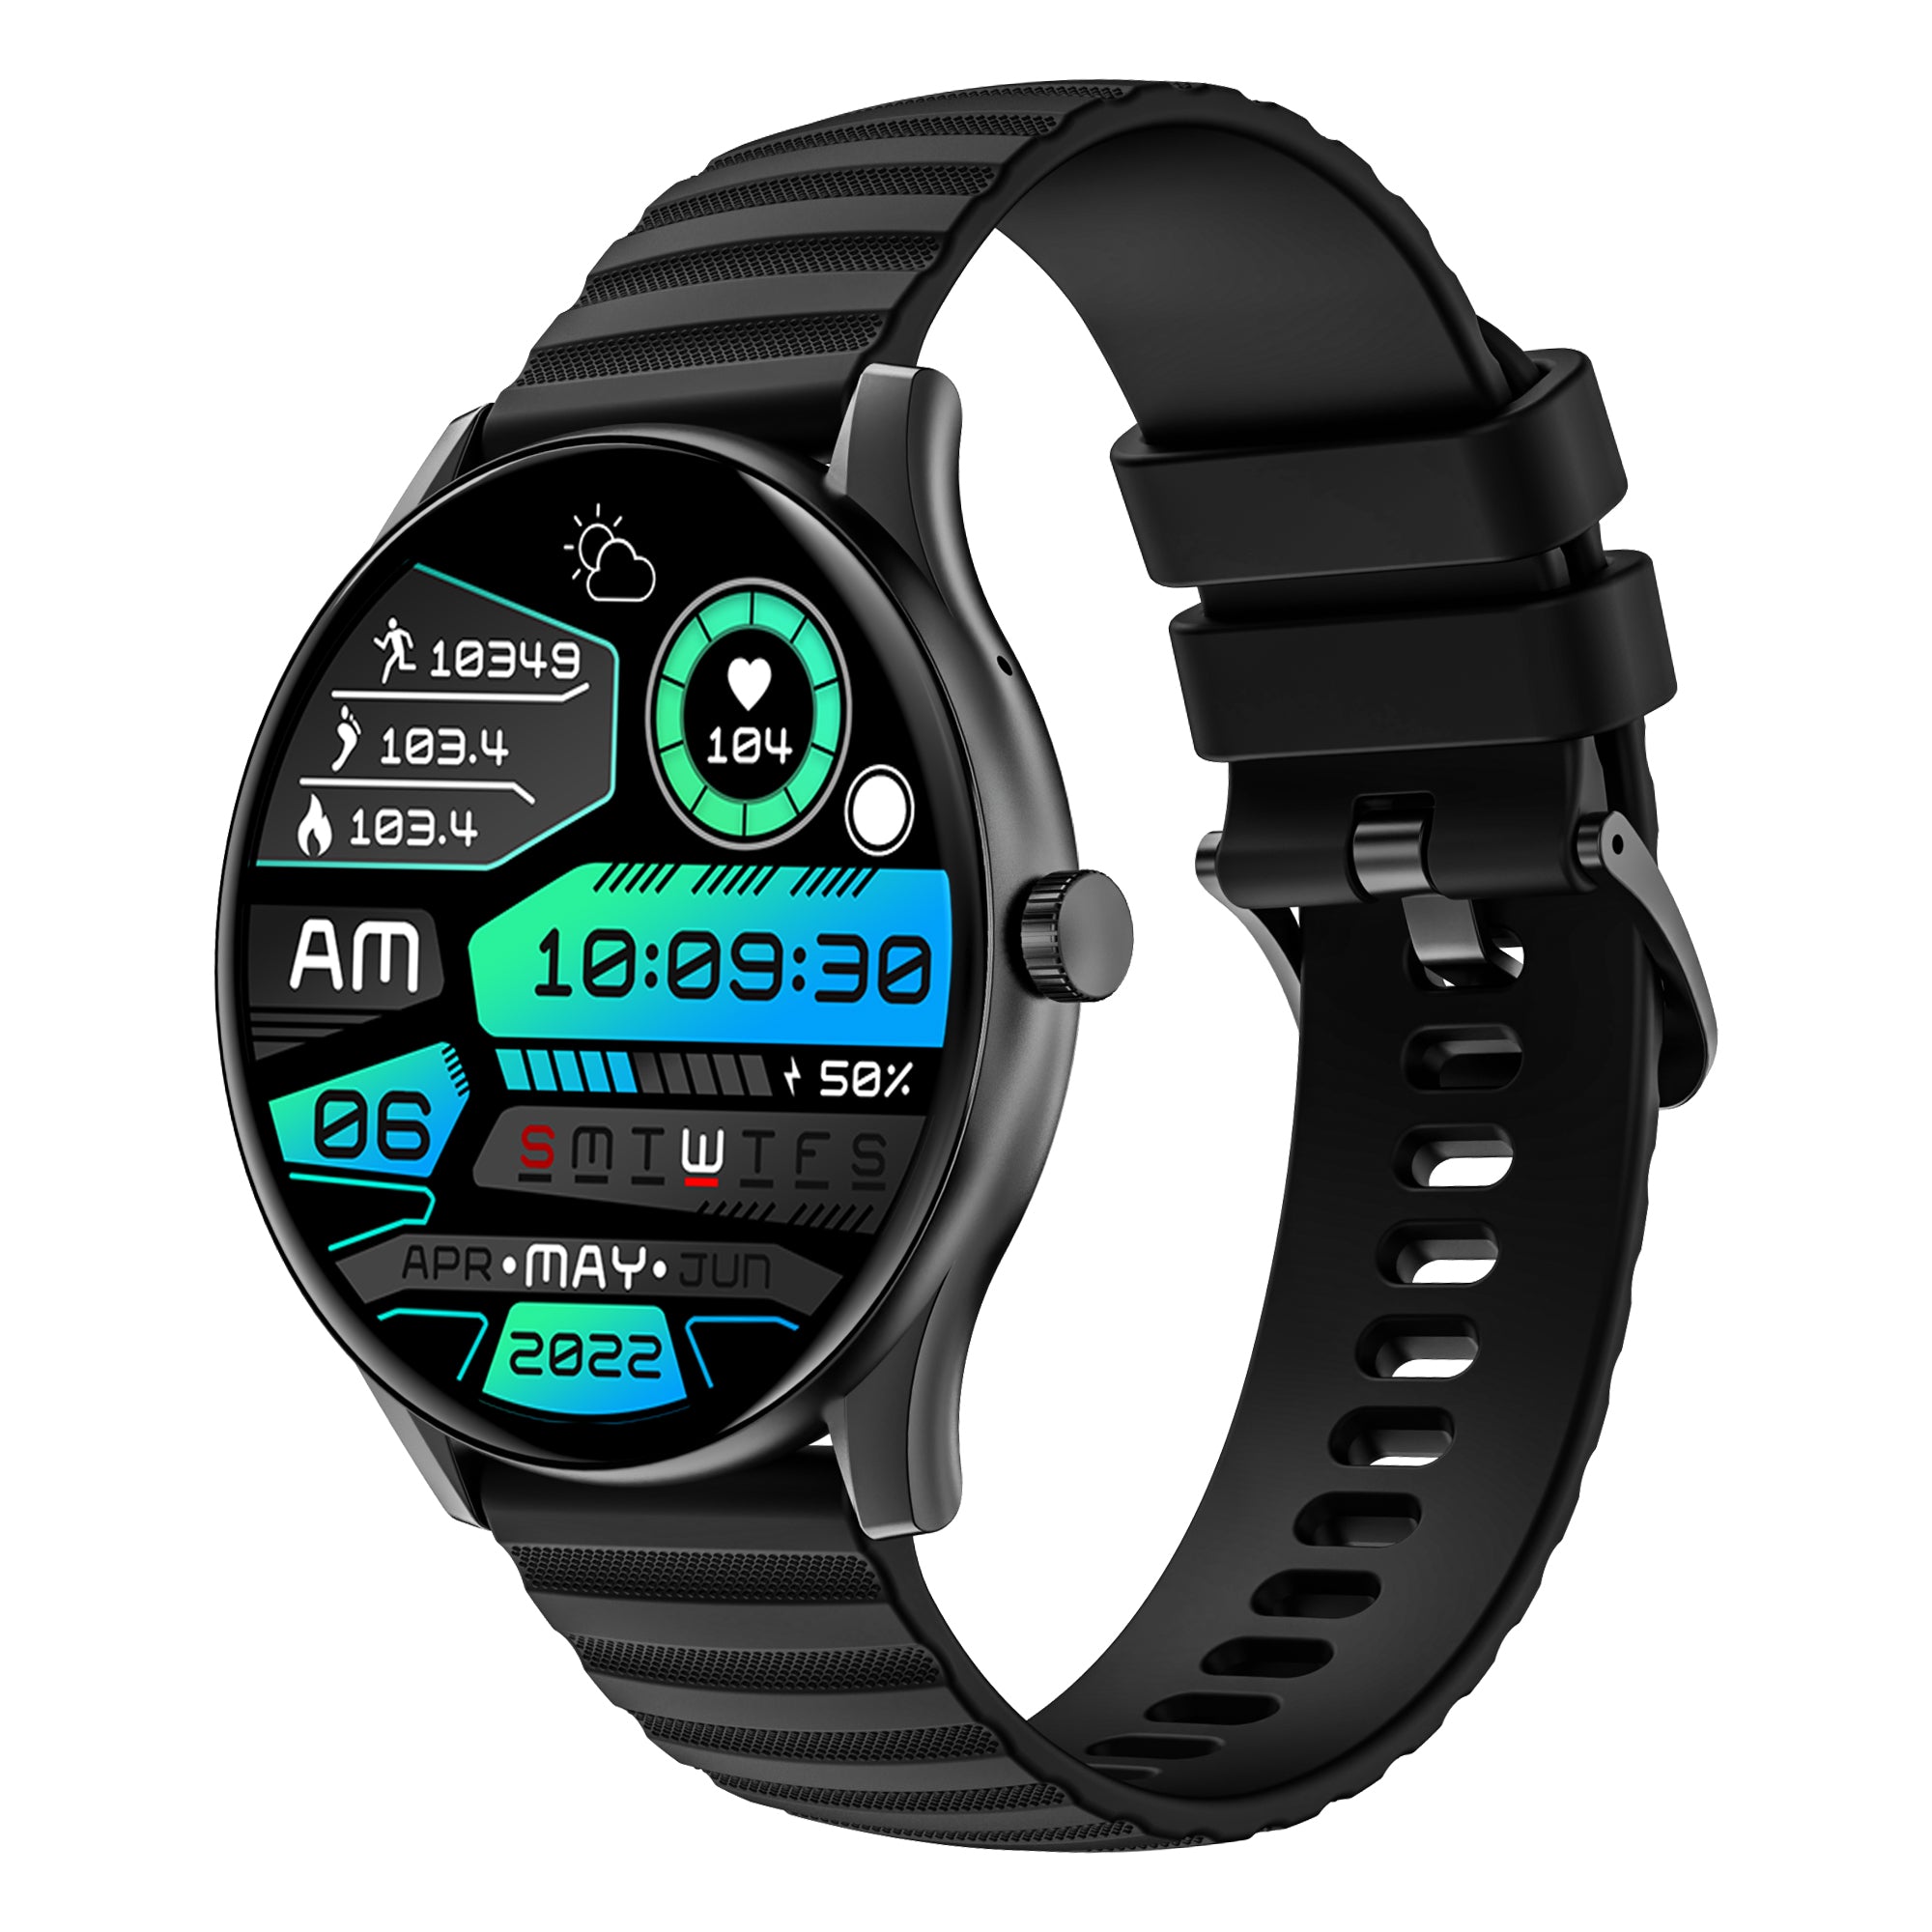 GIZMORE Curve 3.54cm (1.39) |AOD 500 NITS|360x360 HD Display Bluetooth Calling Smartwatch